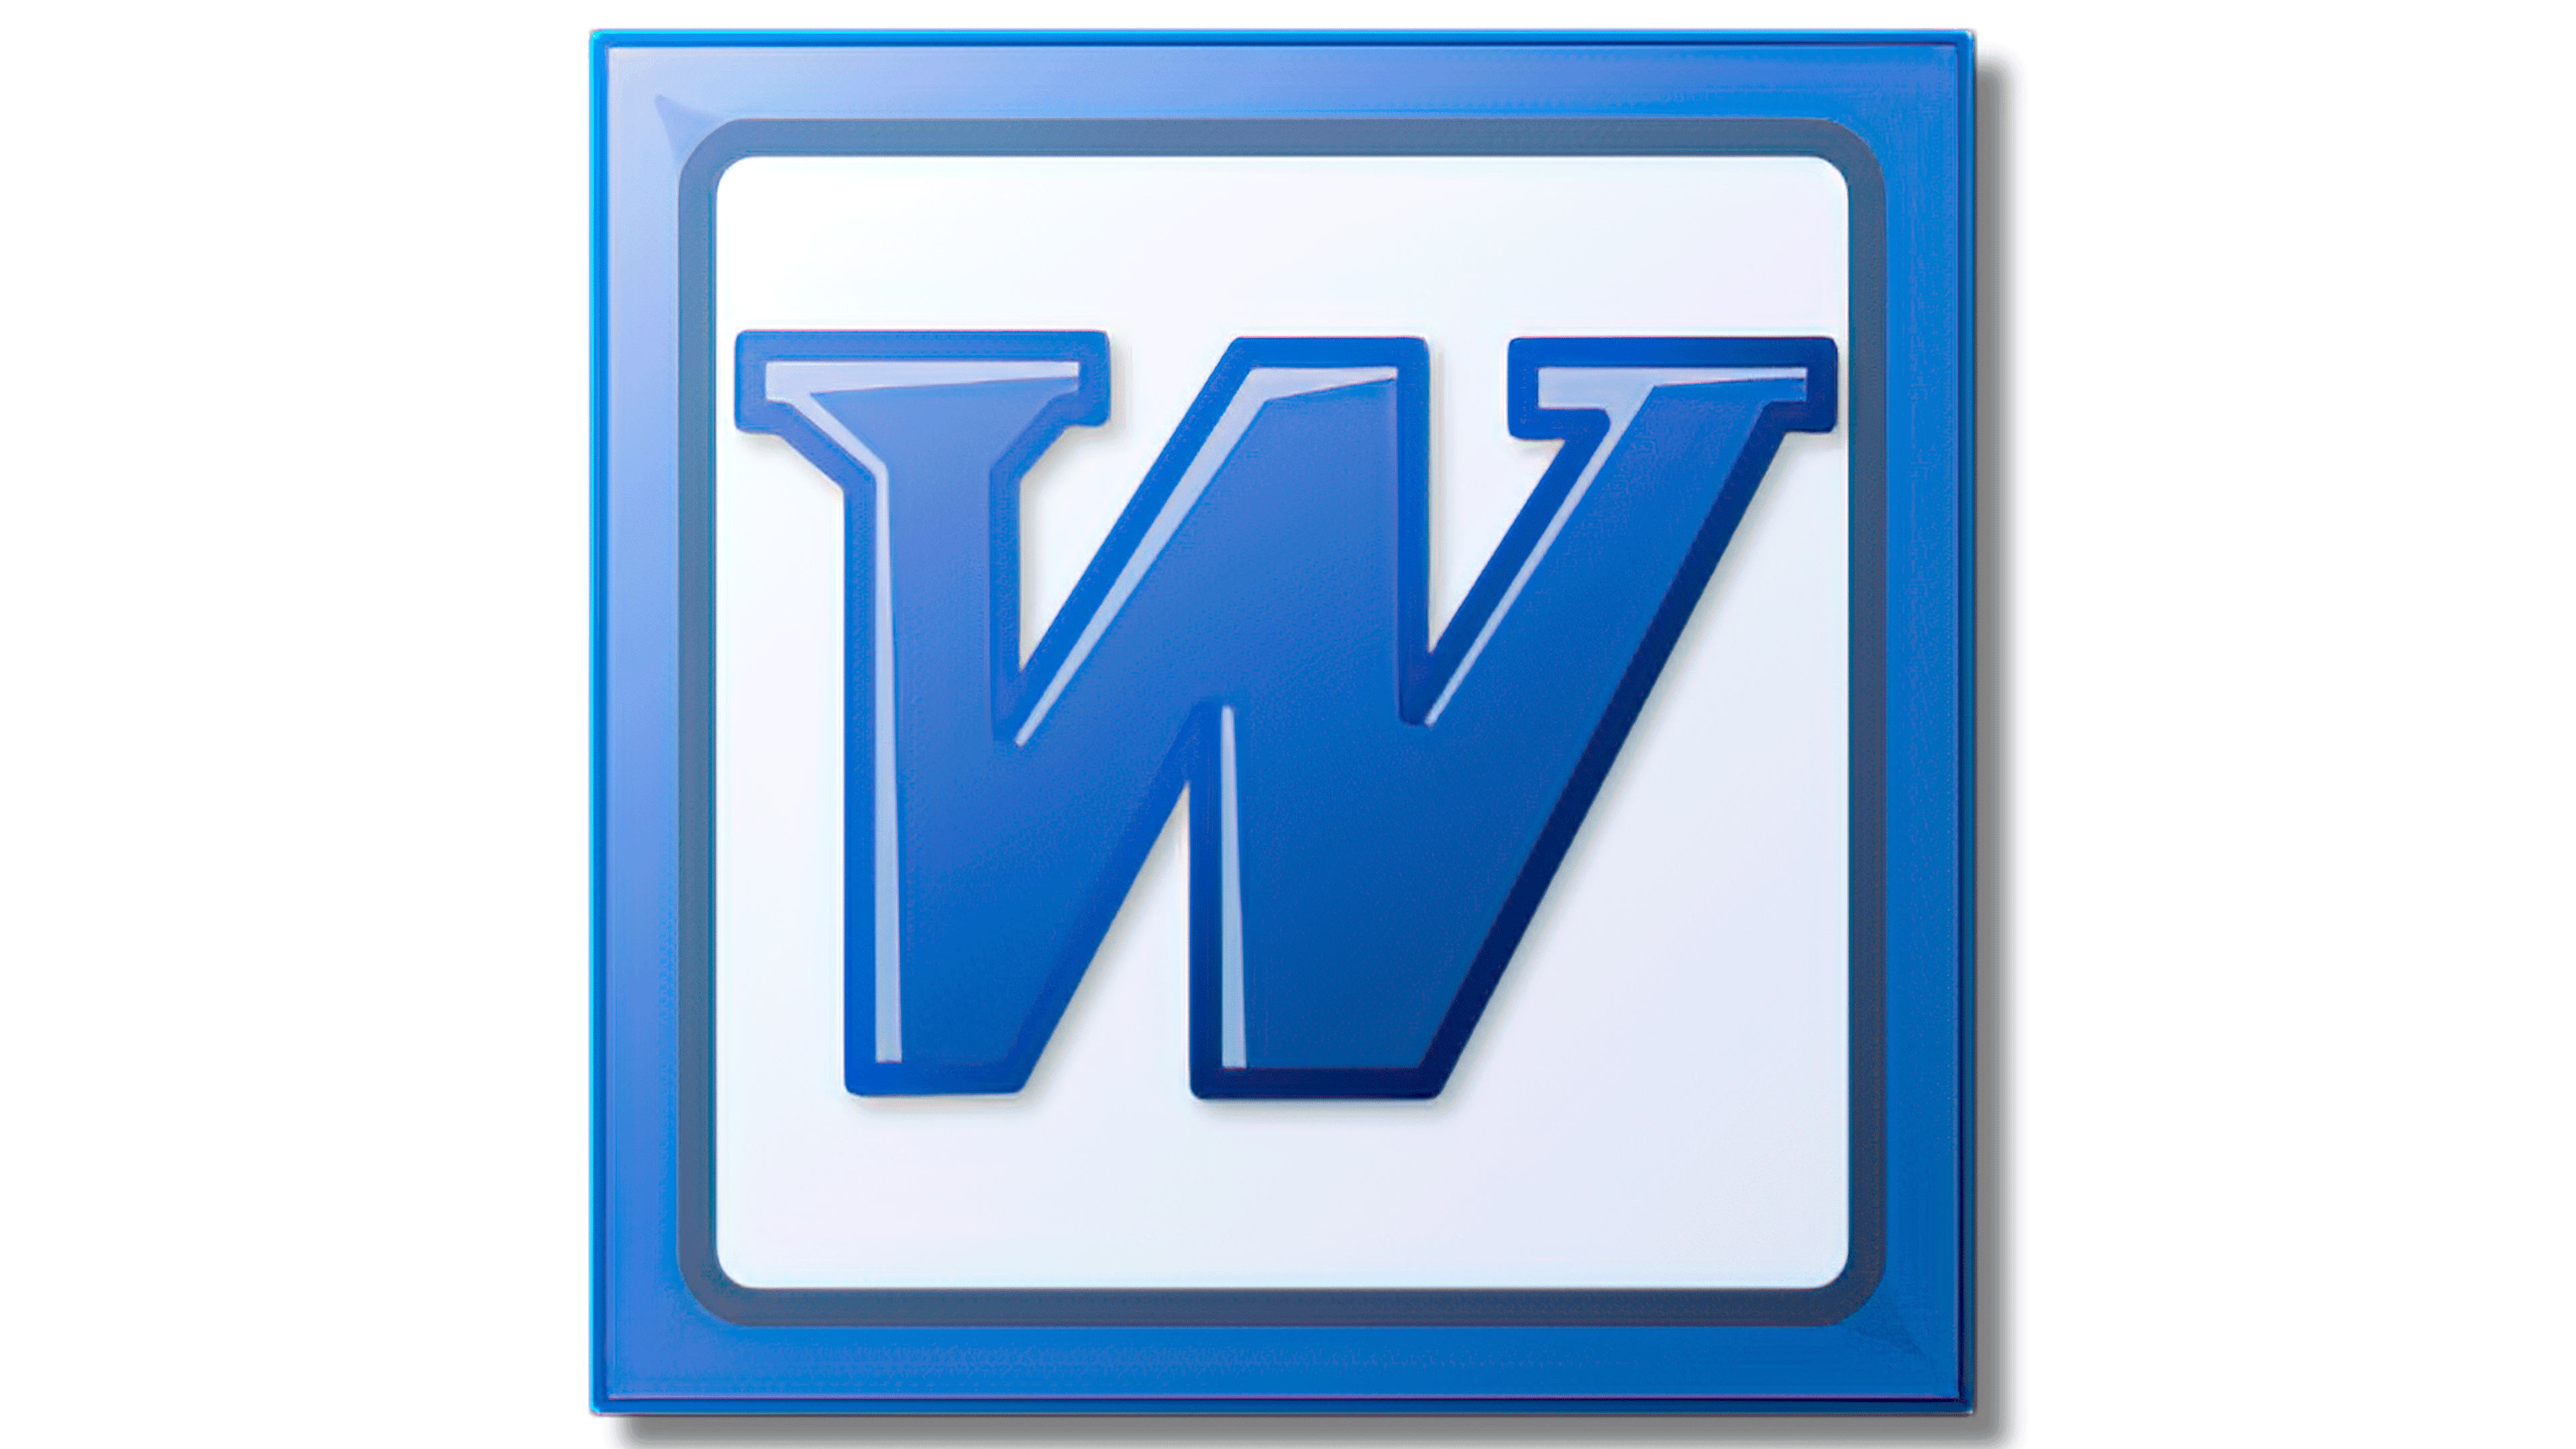 office 2003 logo